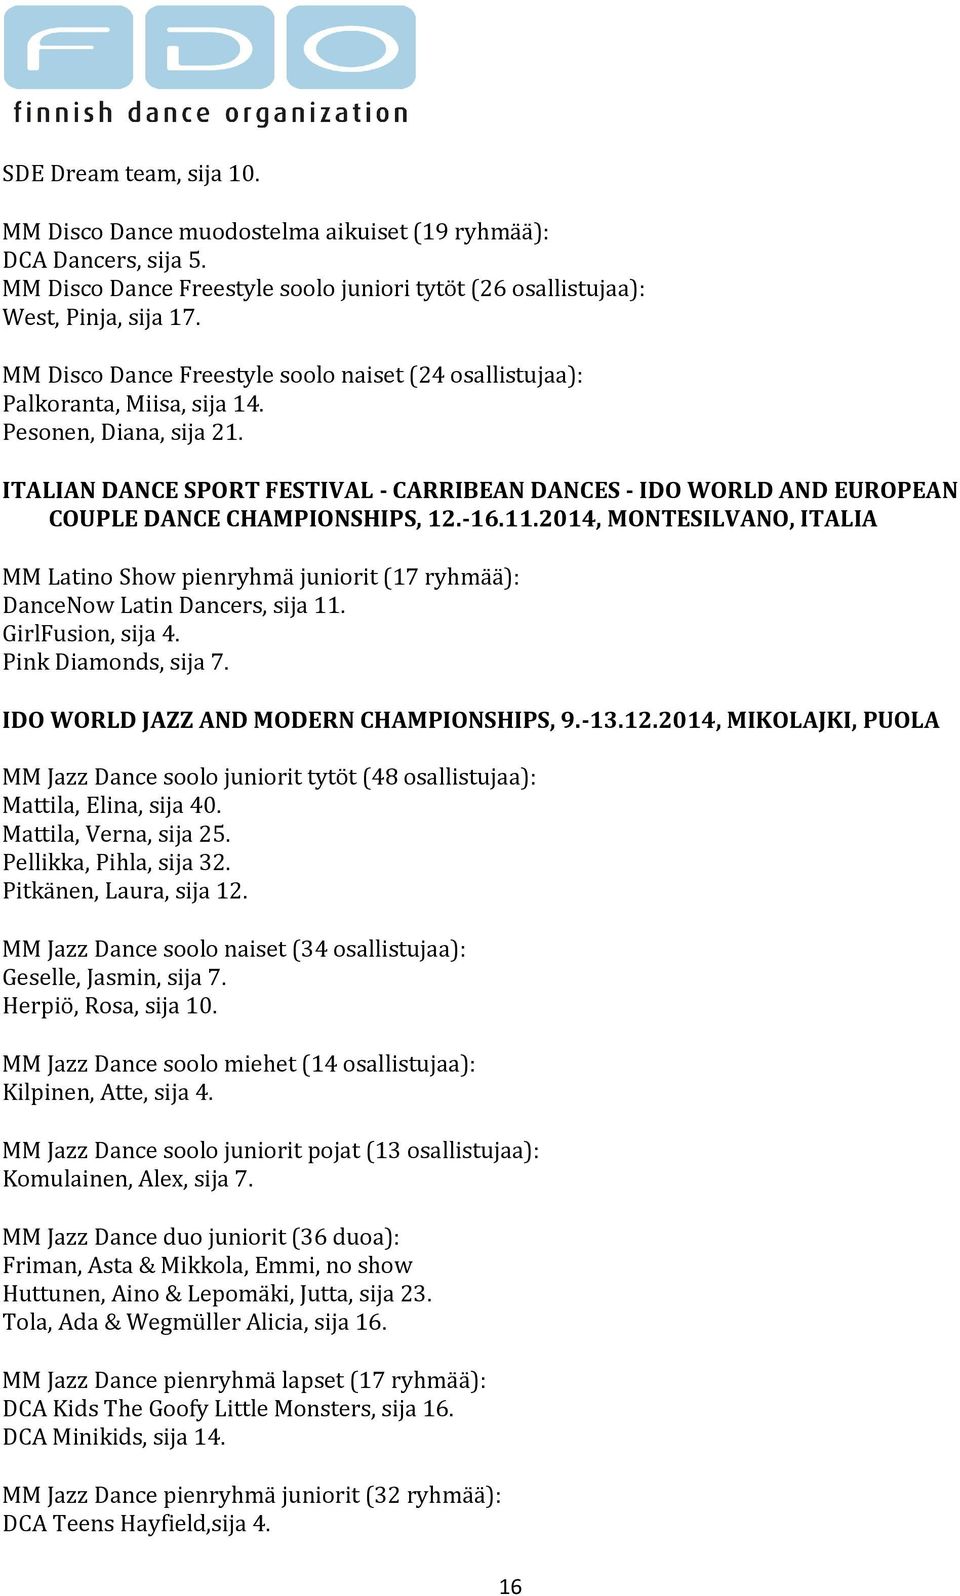 ITALIAN DANCE SPORT FESTIVAL - CARRIBEAN DANCES - IDO WORLD AND EUROPEAN COUPLE DANCE CHAMPIONSHIPS, 12.-16.11.